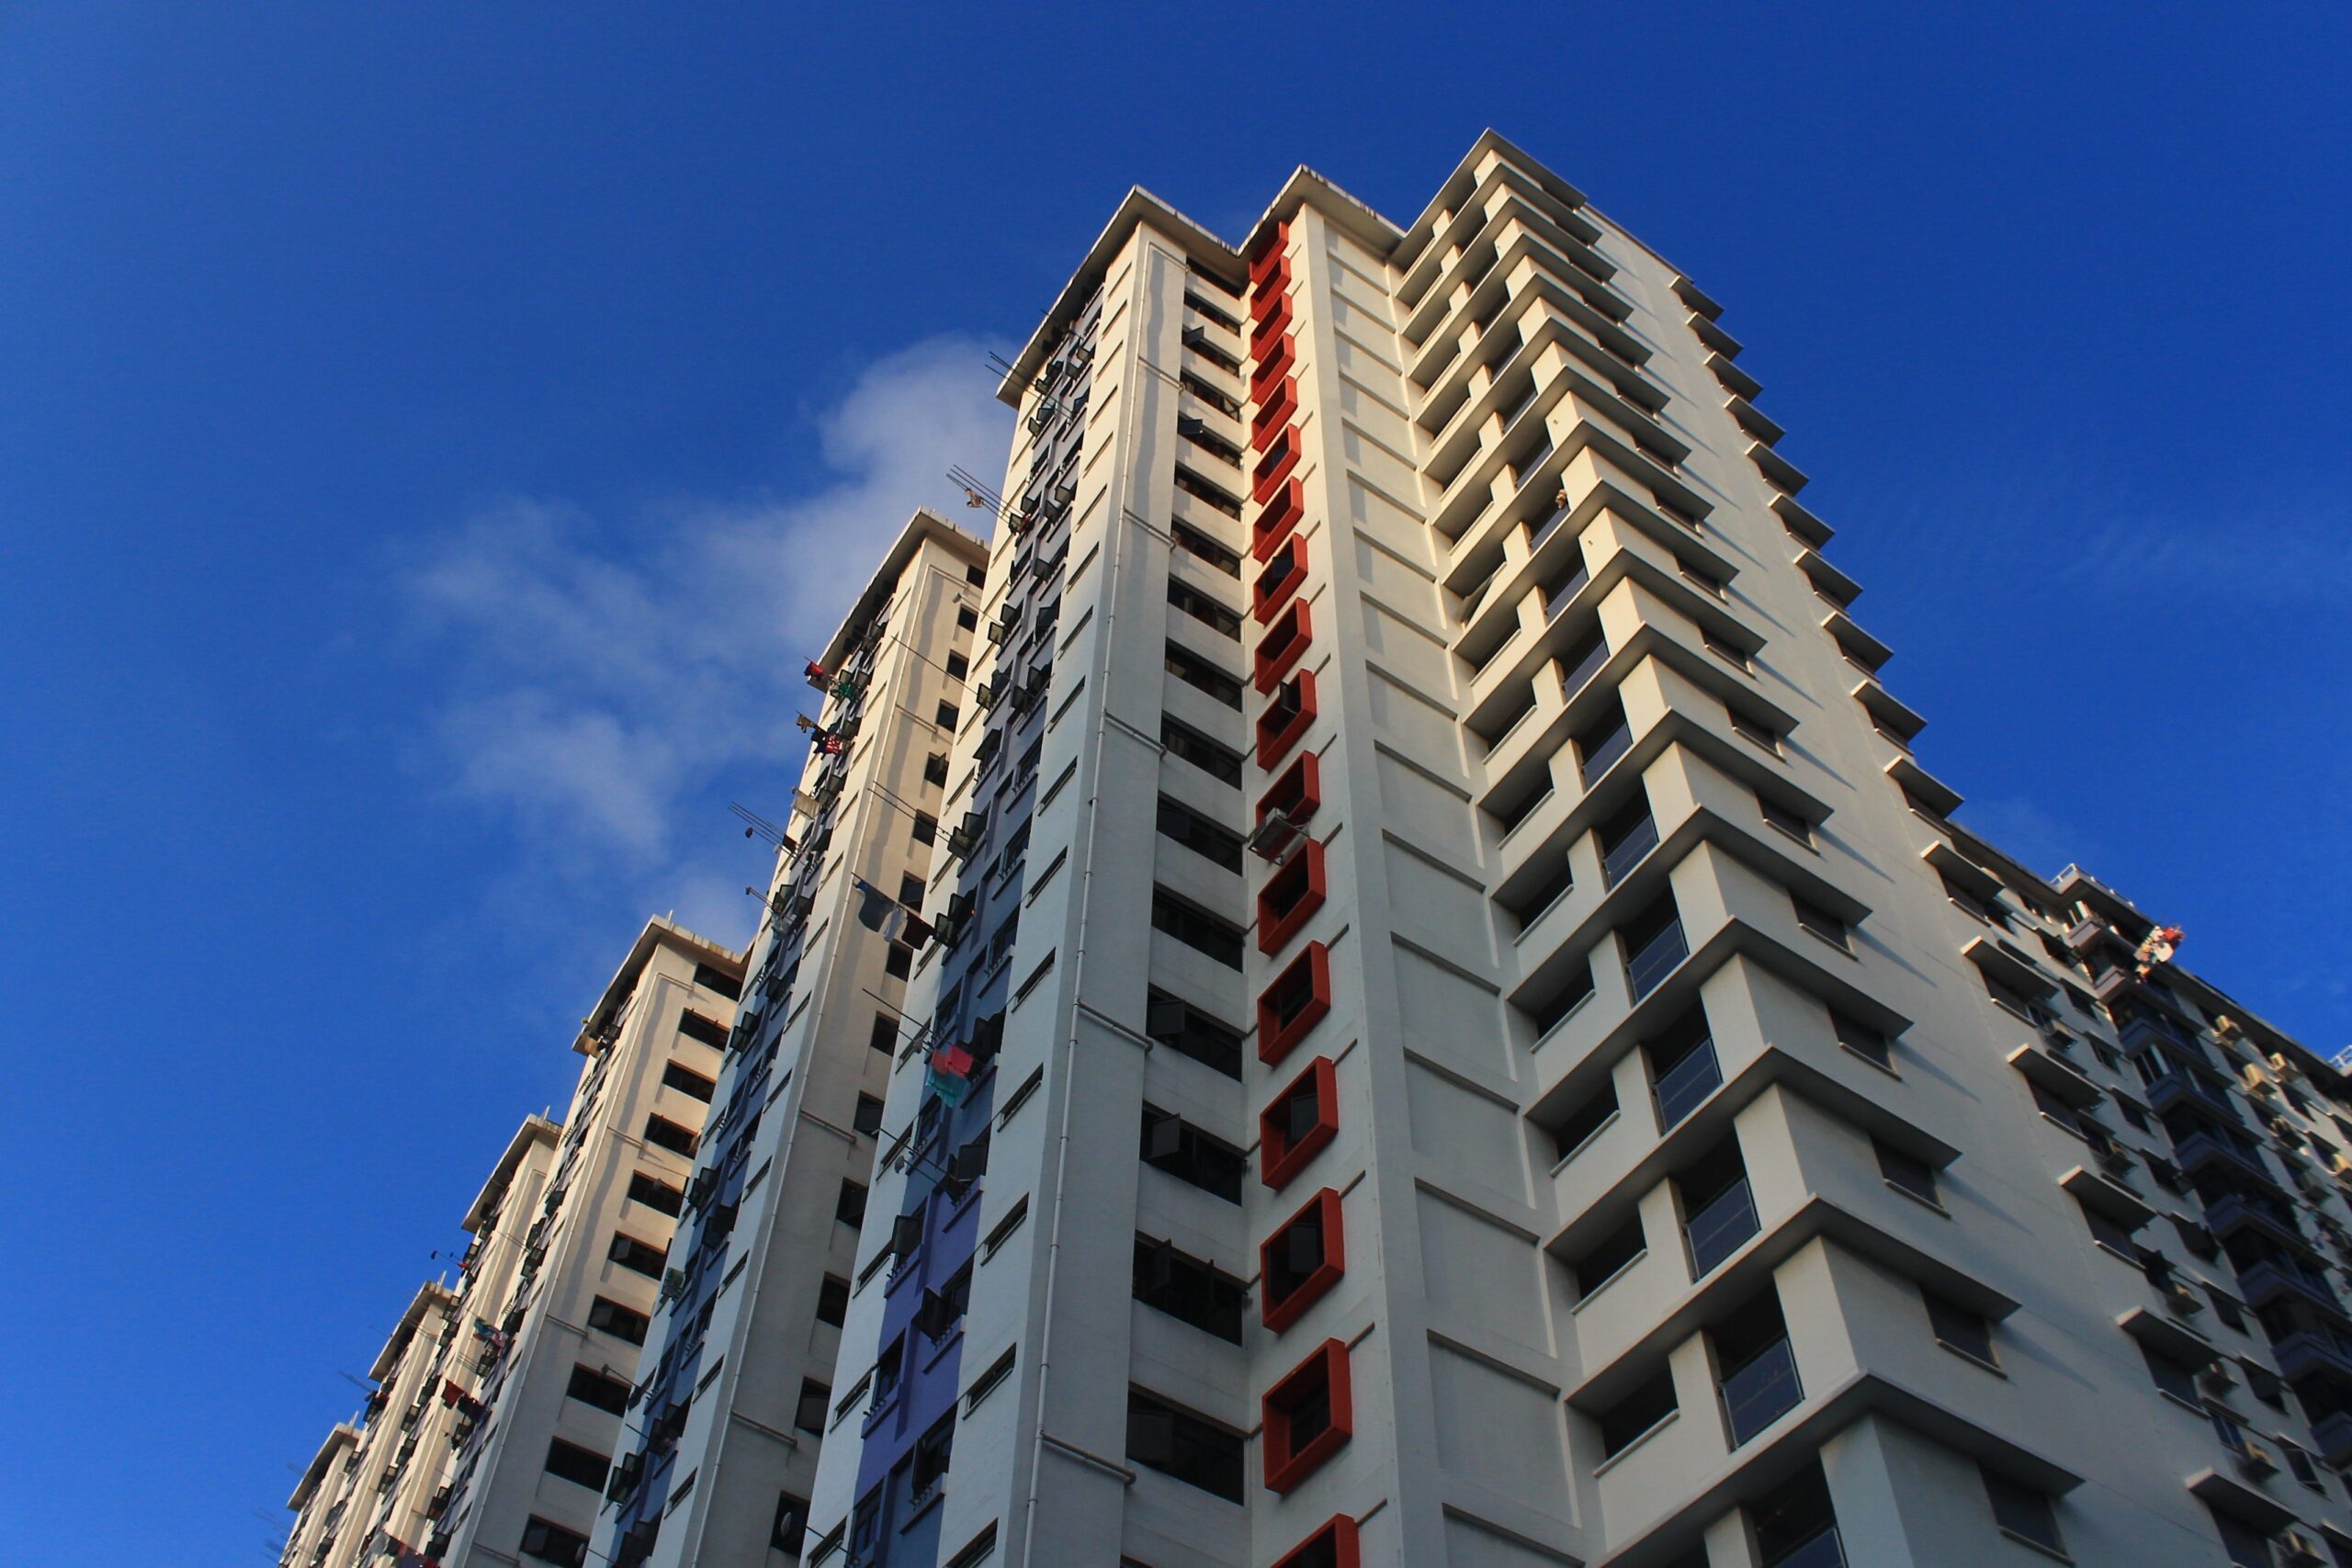 housing in Singapore